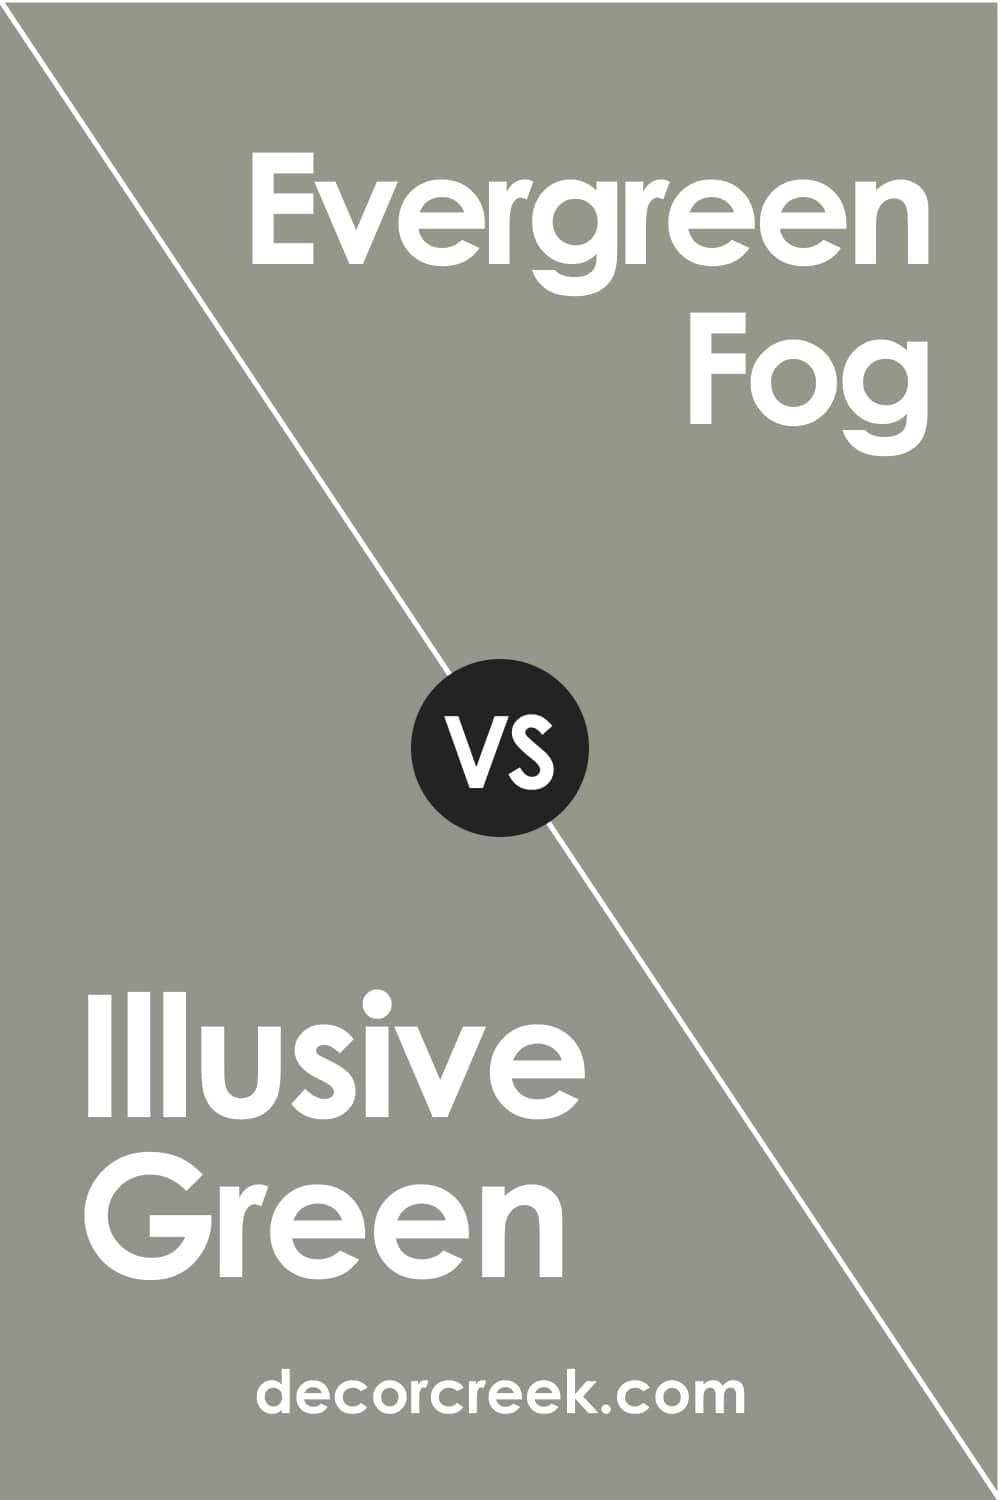 Illusive Green vs Evergreen Fog